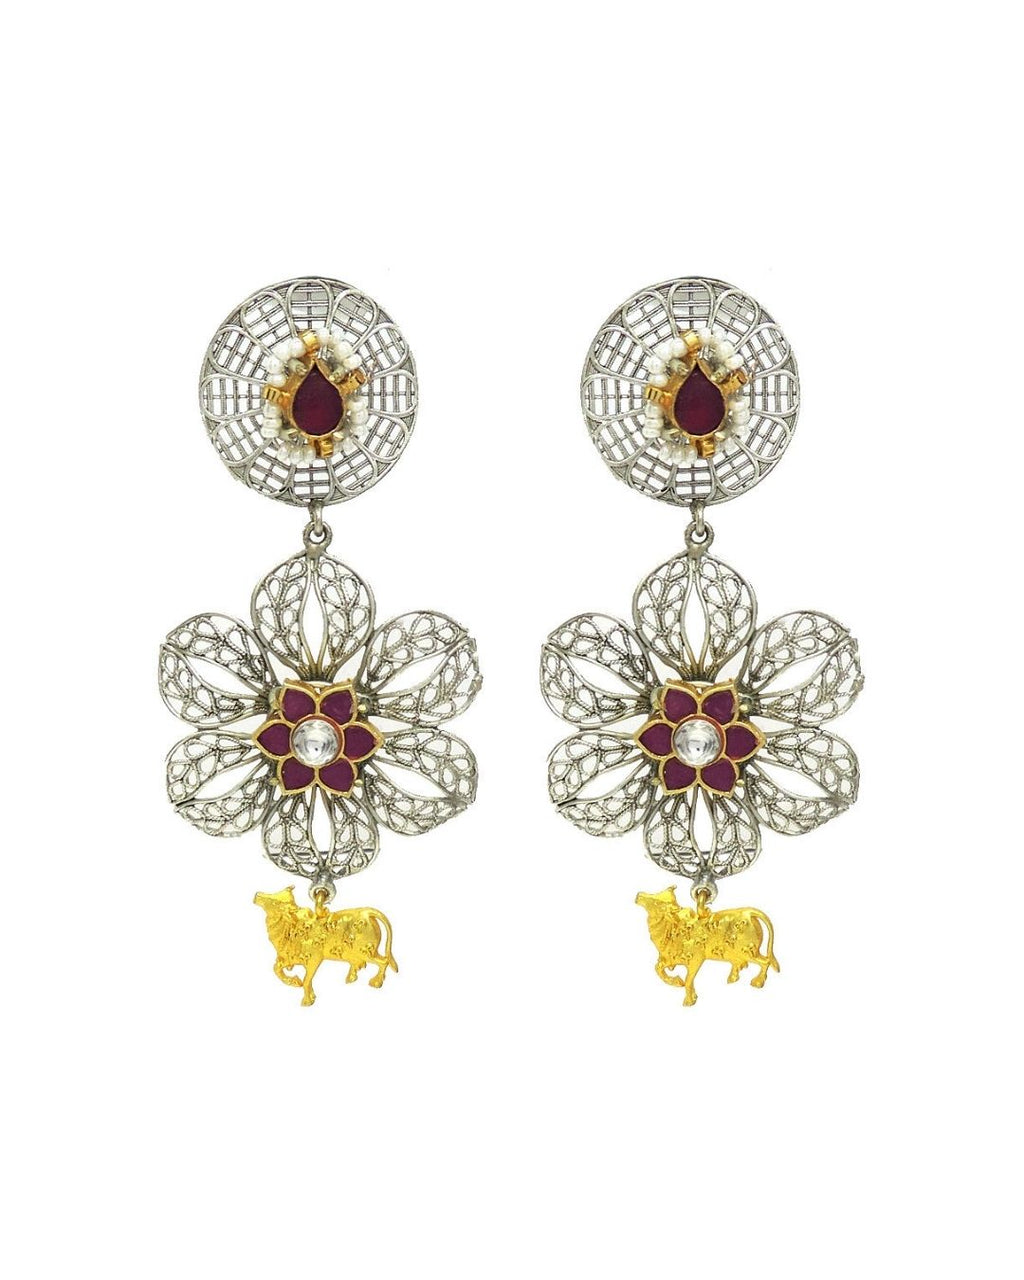 Dahlia Earrings - Earrings - Handcrafted Jewellery - Made in India - Dubai Jewellery, Fashion & Lifestyle - Dori